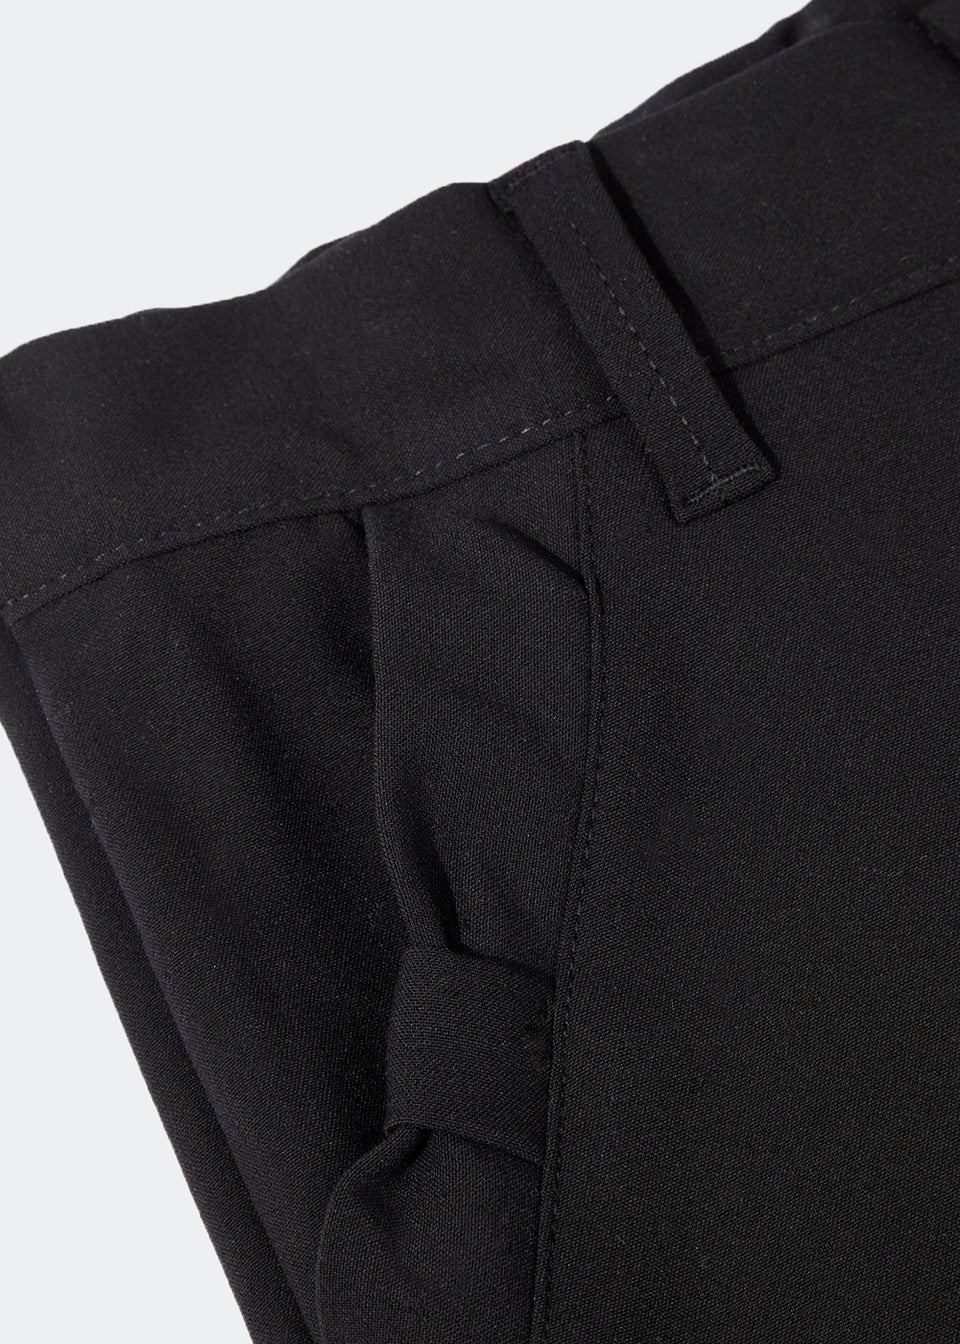 50% OFF on Tulsattva Women Black Solid Slim Fit Flat-Front Trousers on  Myntra | PaisaWapas.com